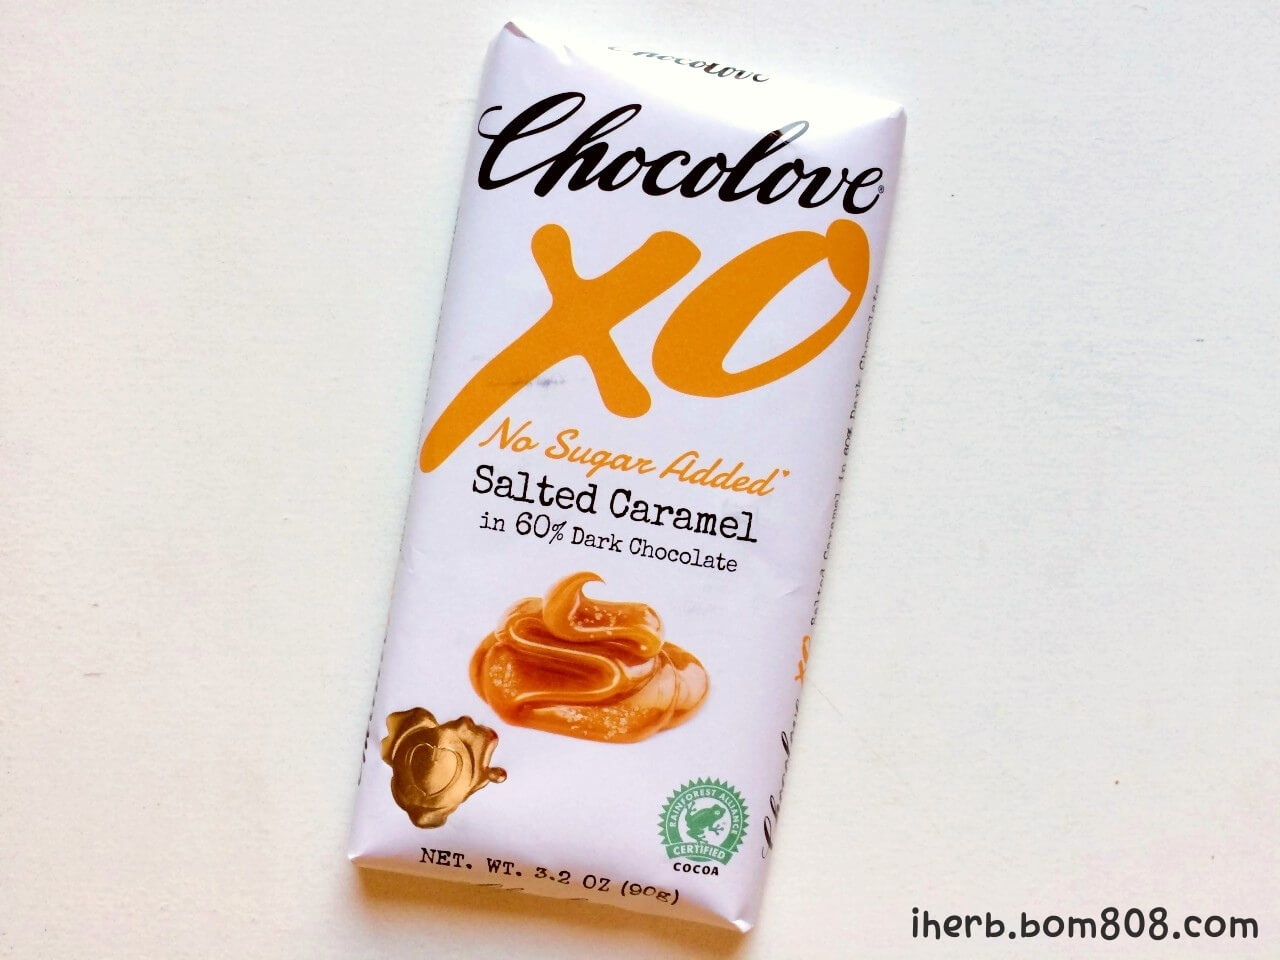 Chocolove, XO塩キャラメル入りダークチョコレート